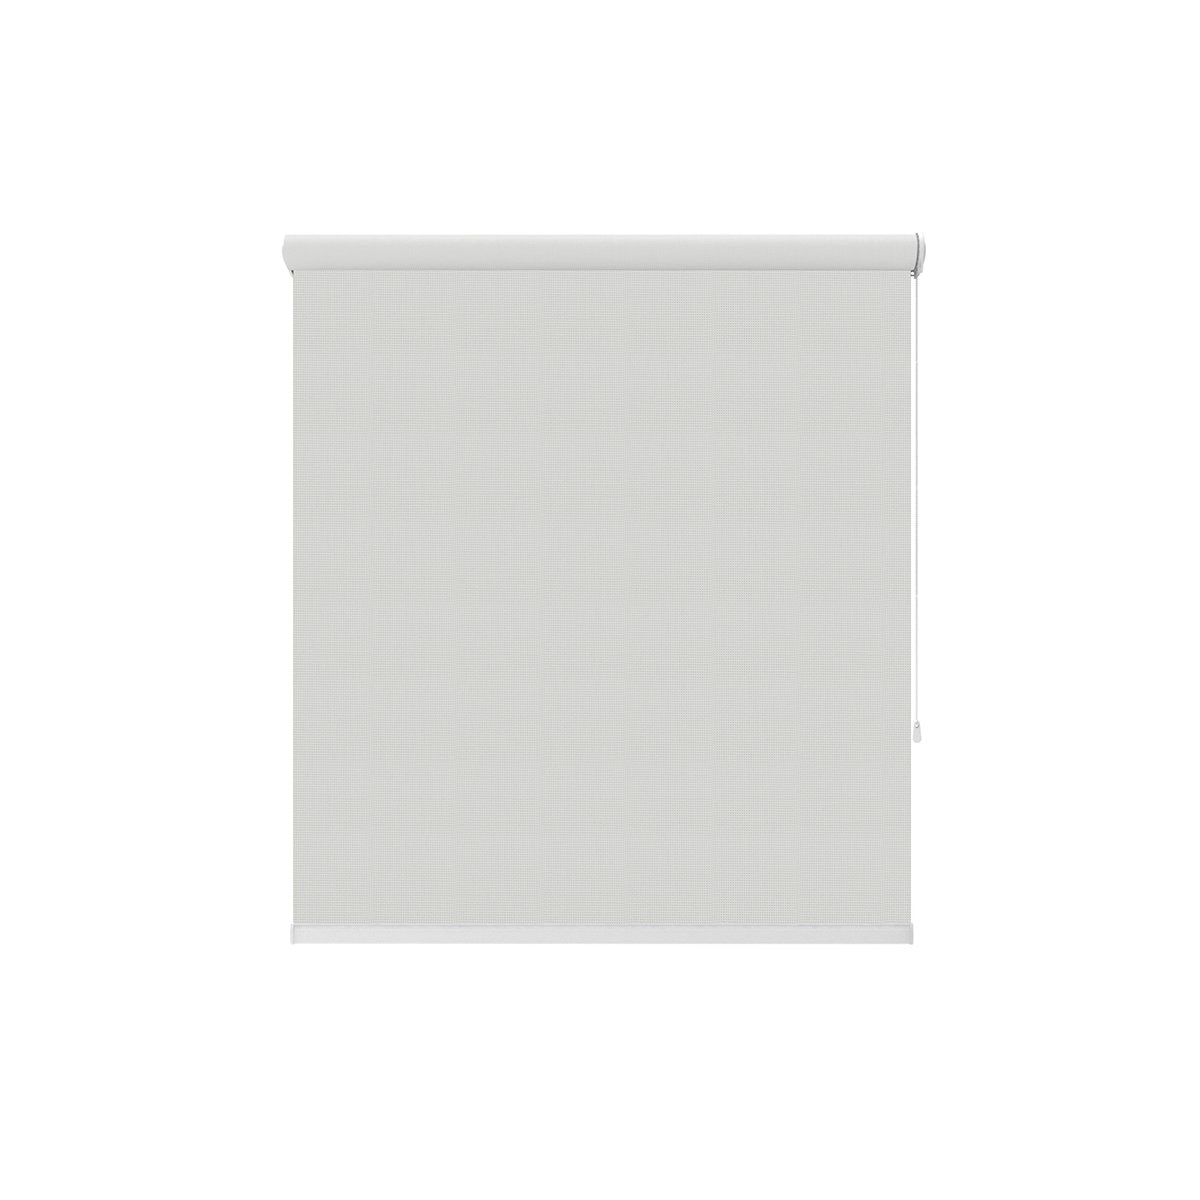 Persiana Enrollable Translucida Screen Phifer 4500 New 0.80 X 2.50 Blanco Classic